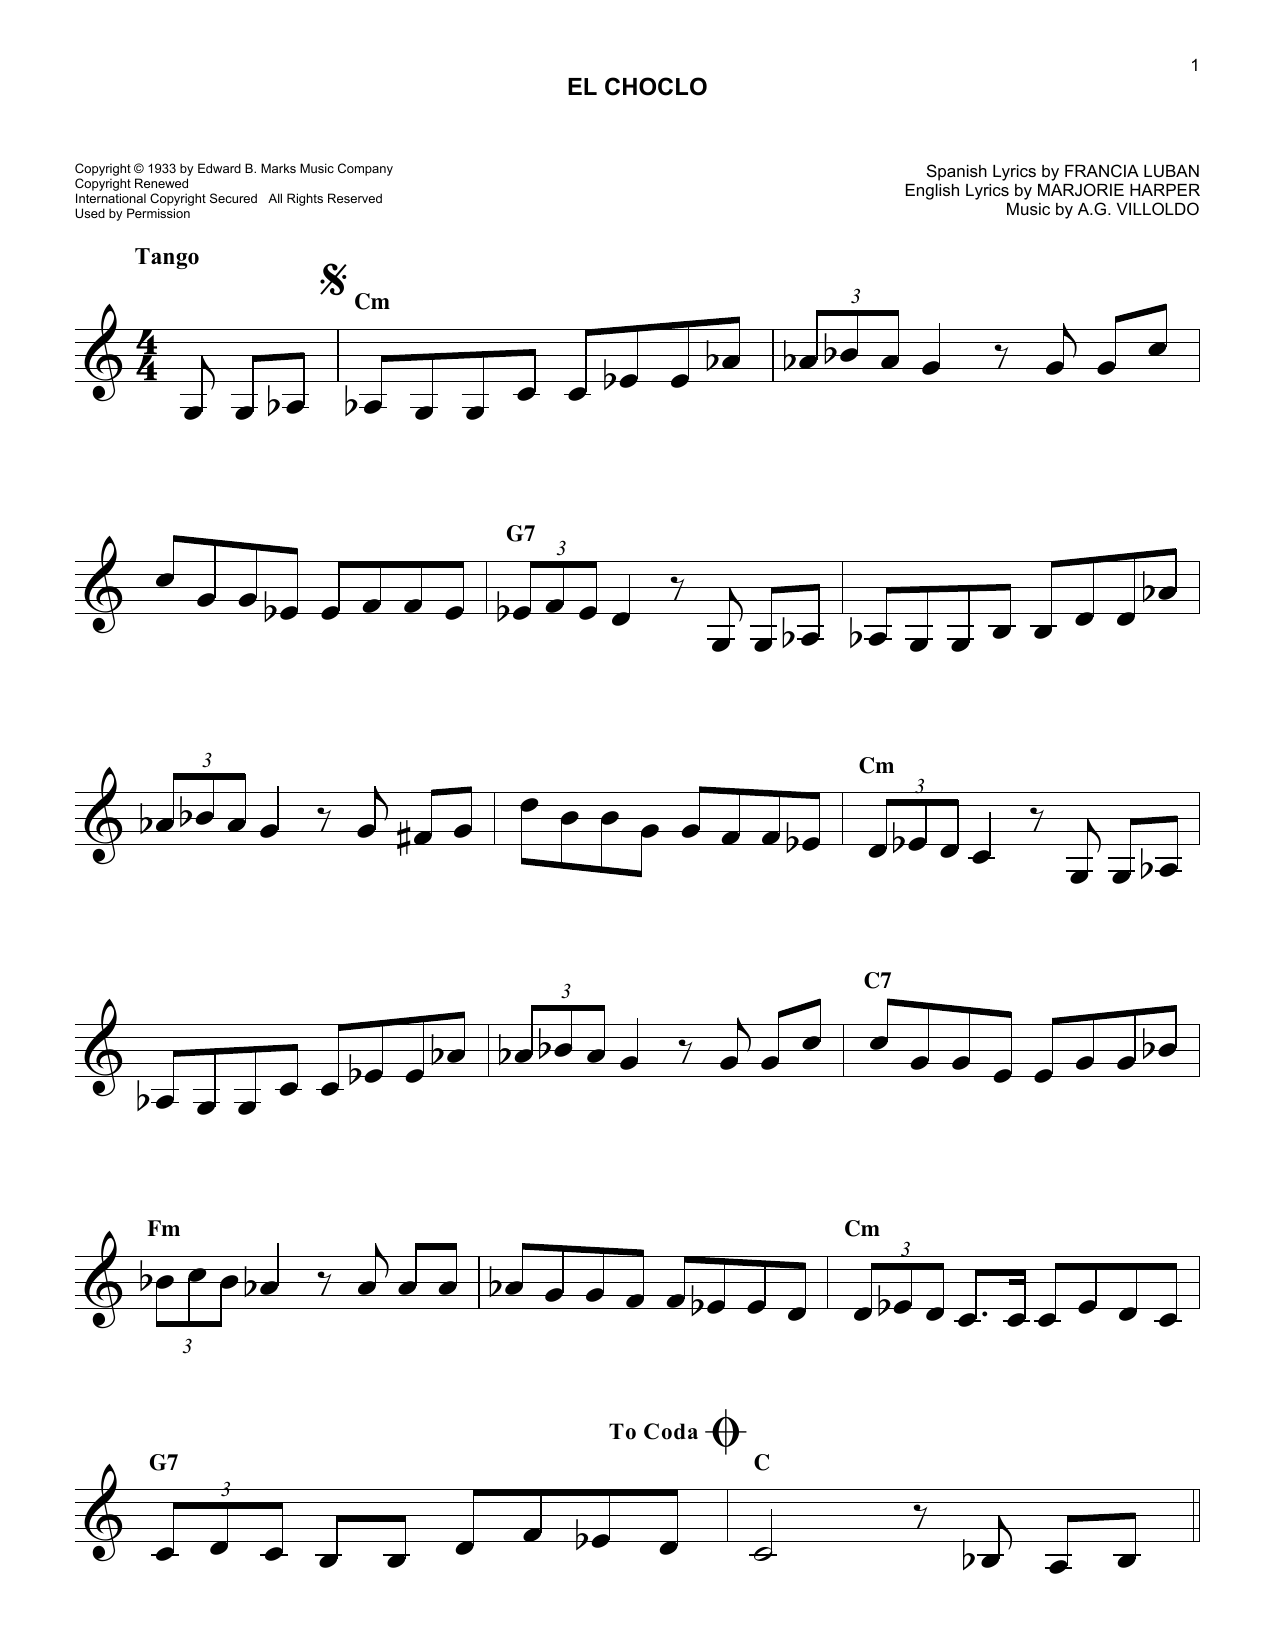 A.G. Villoldo El Choclo Sheet Music Notes & Chords for Melody Line, Lyrics & Chords - Download or Print PDF